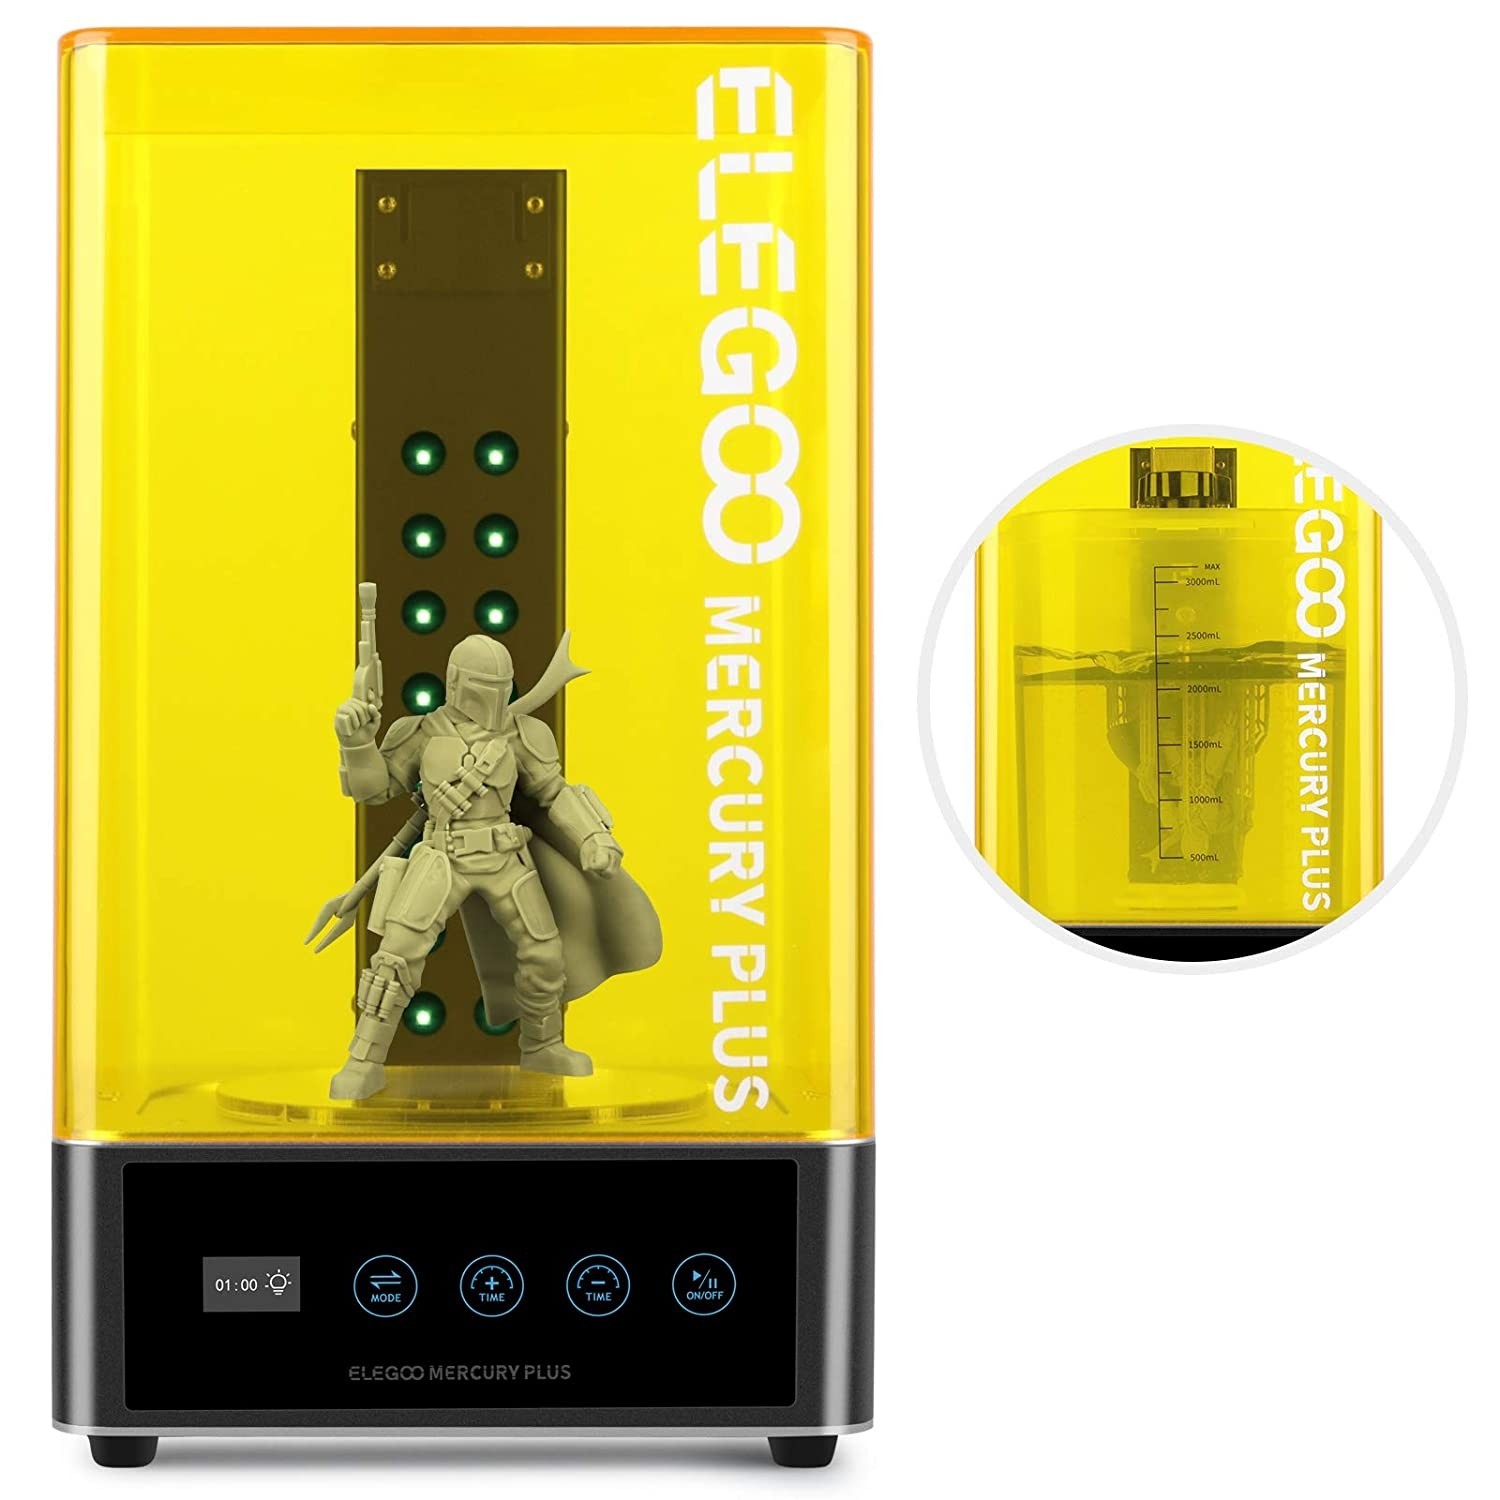 ELEGOO Mercury Plus 2 in 1 Washing and Curing Machine for LCD/DLP/SLA 3D Printed Models